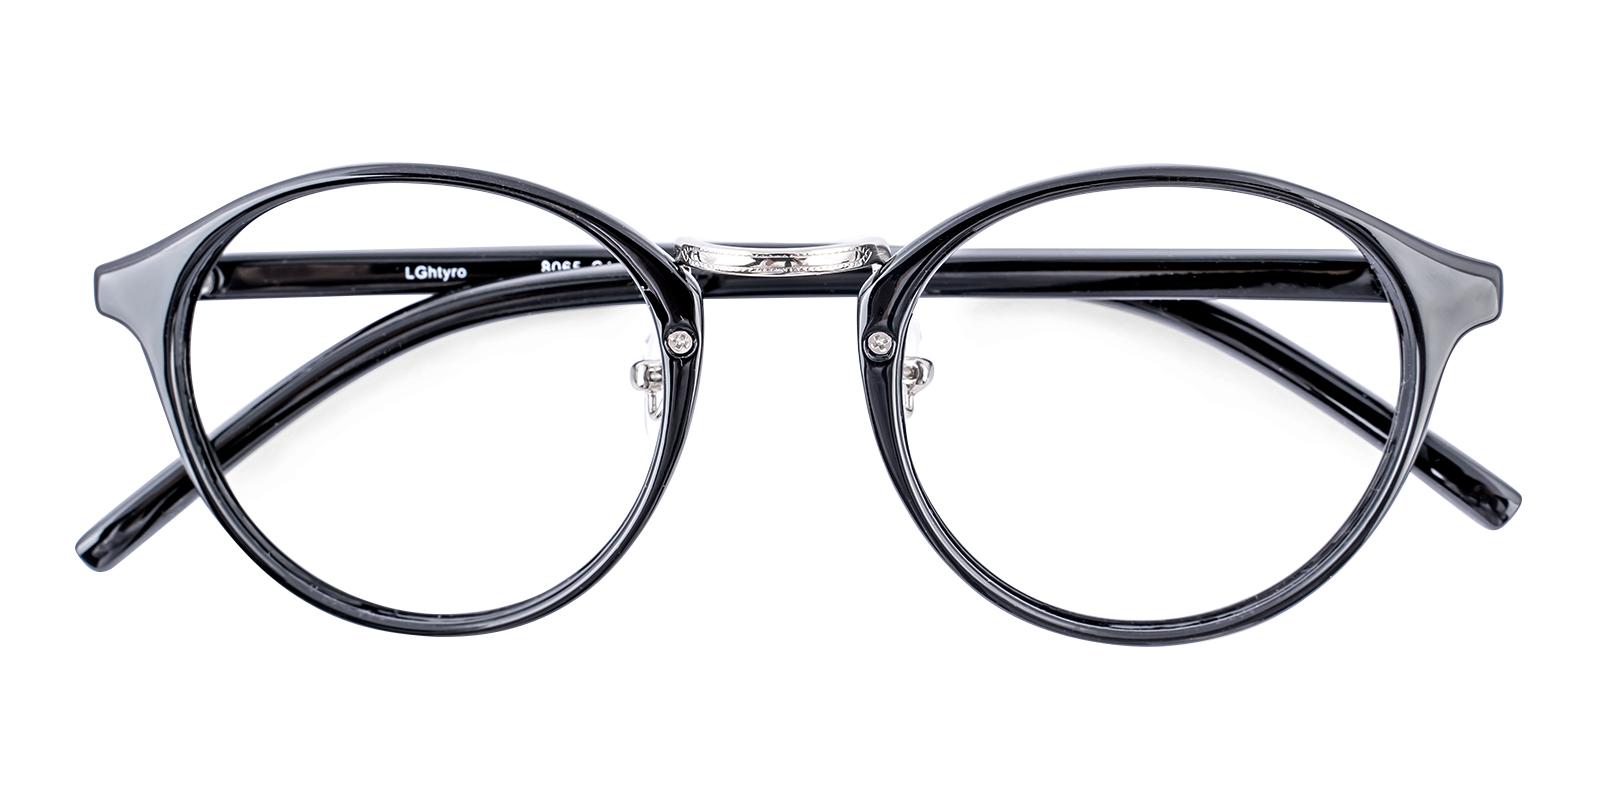 Youngitive Black Plastic Eyeglasses , NosePads Frames from ABBE Glasses